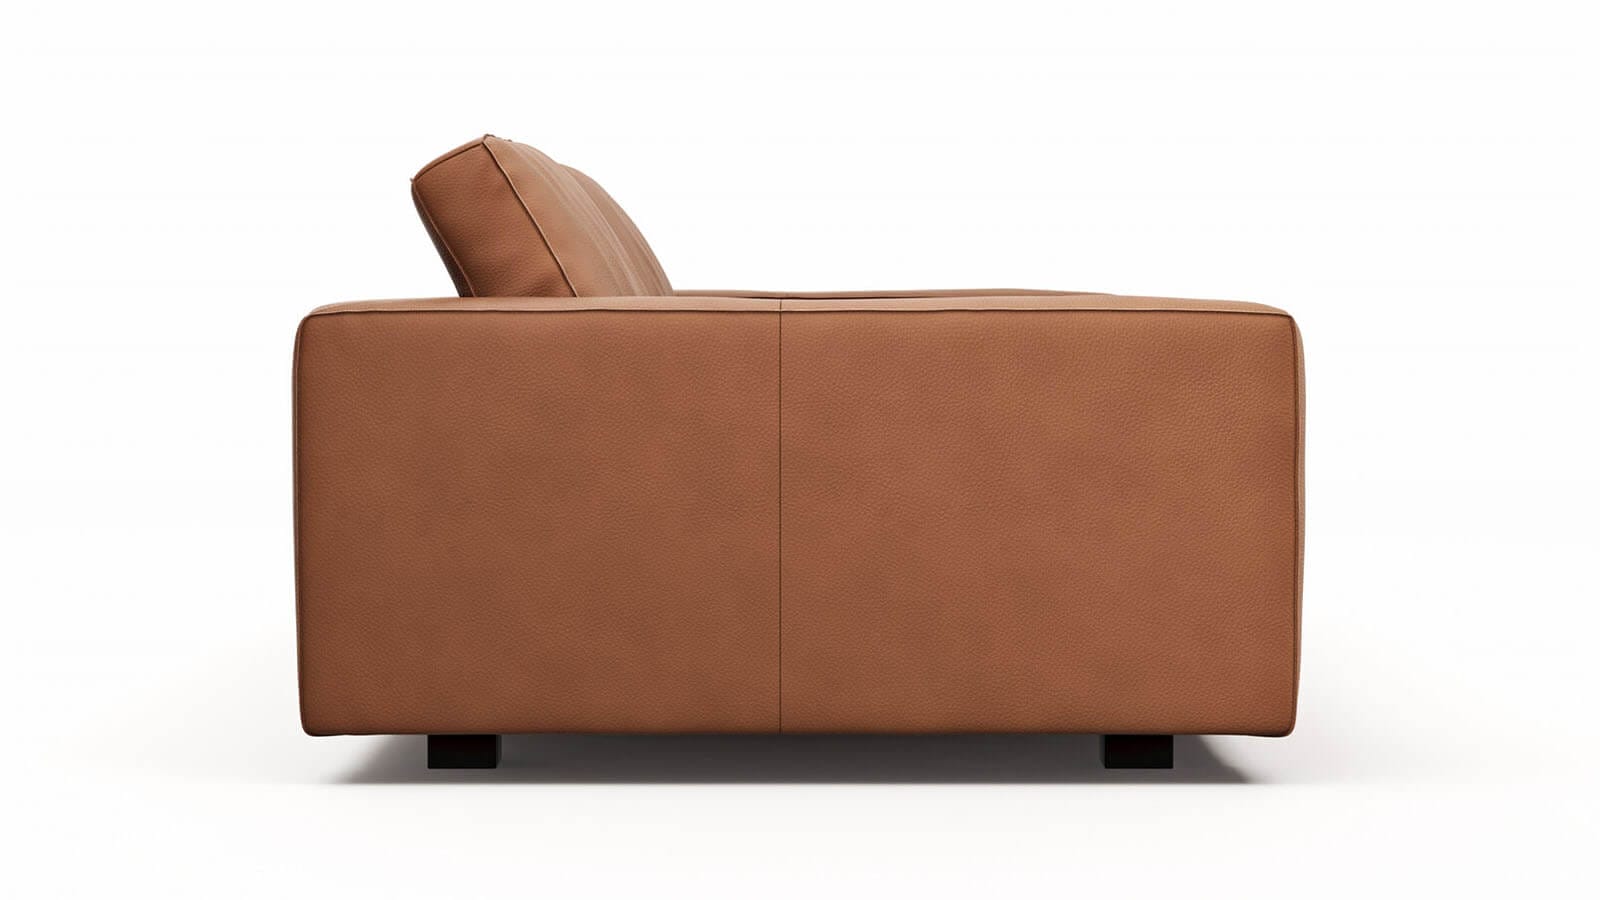 Sofa Aprino 2 - 3,5-Sitzer XL, Dickleder, Cognac, Armlehne Block schmal